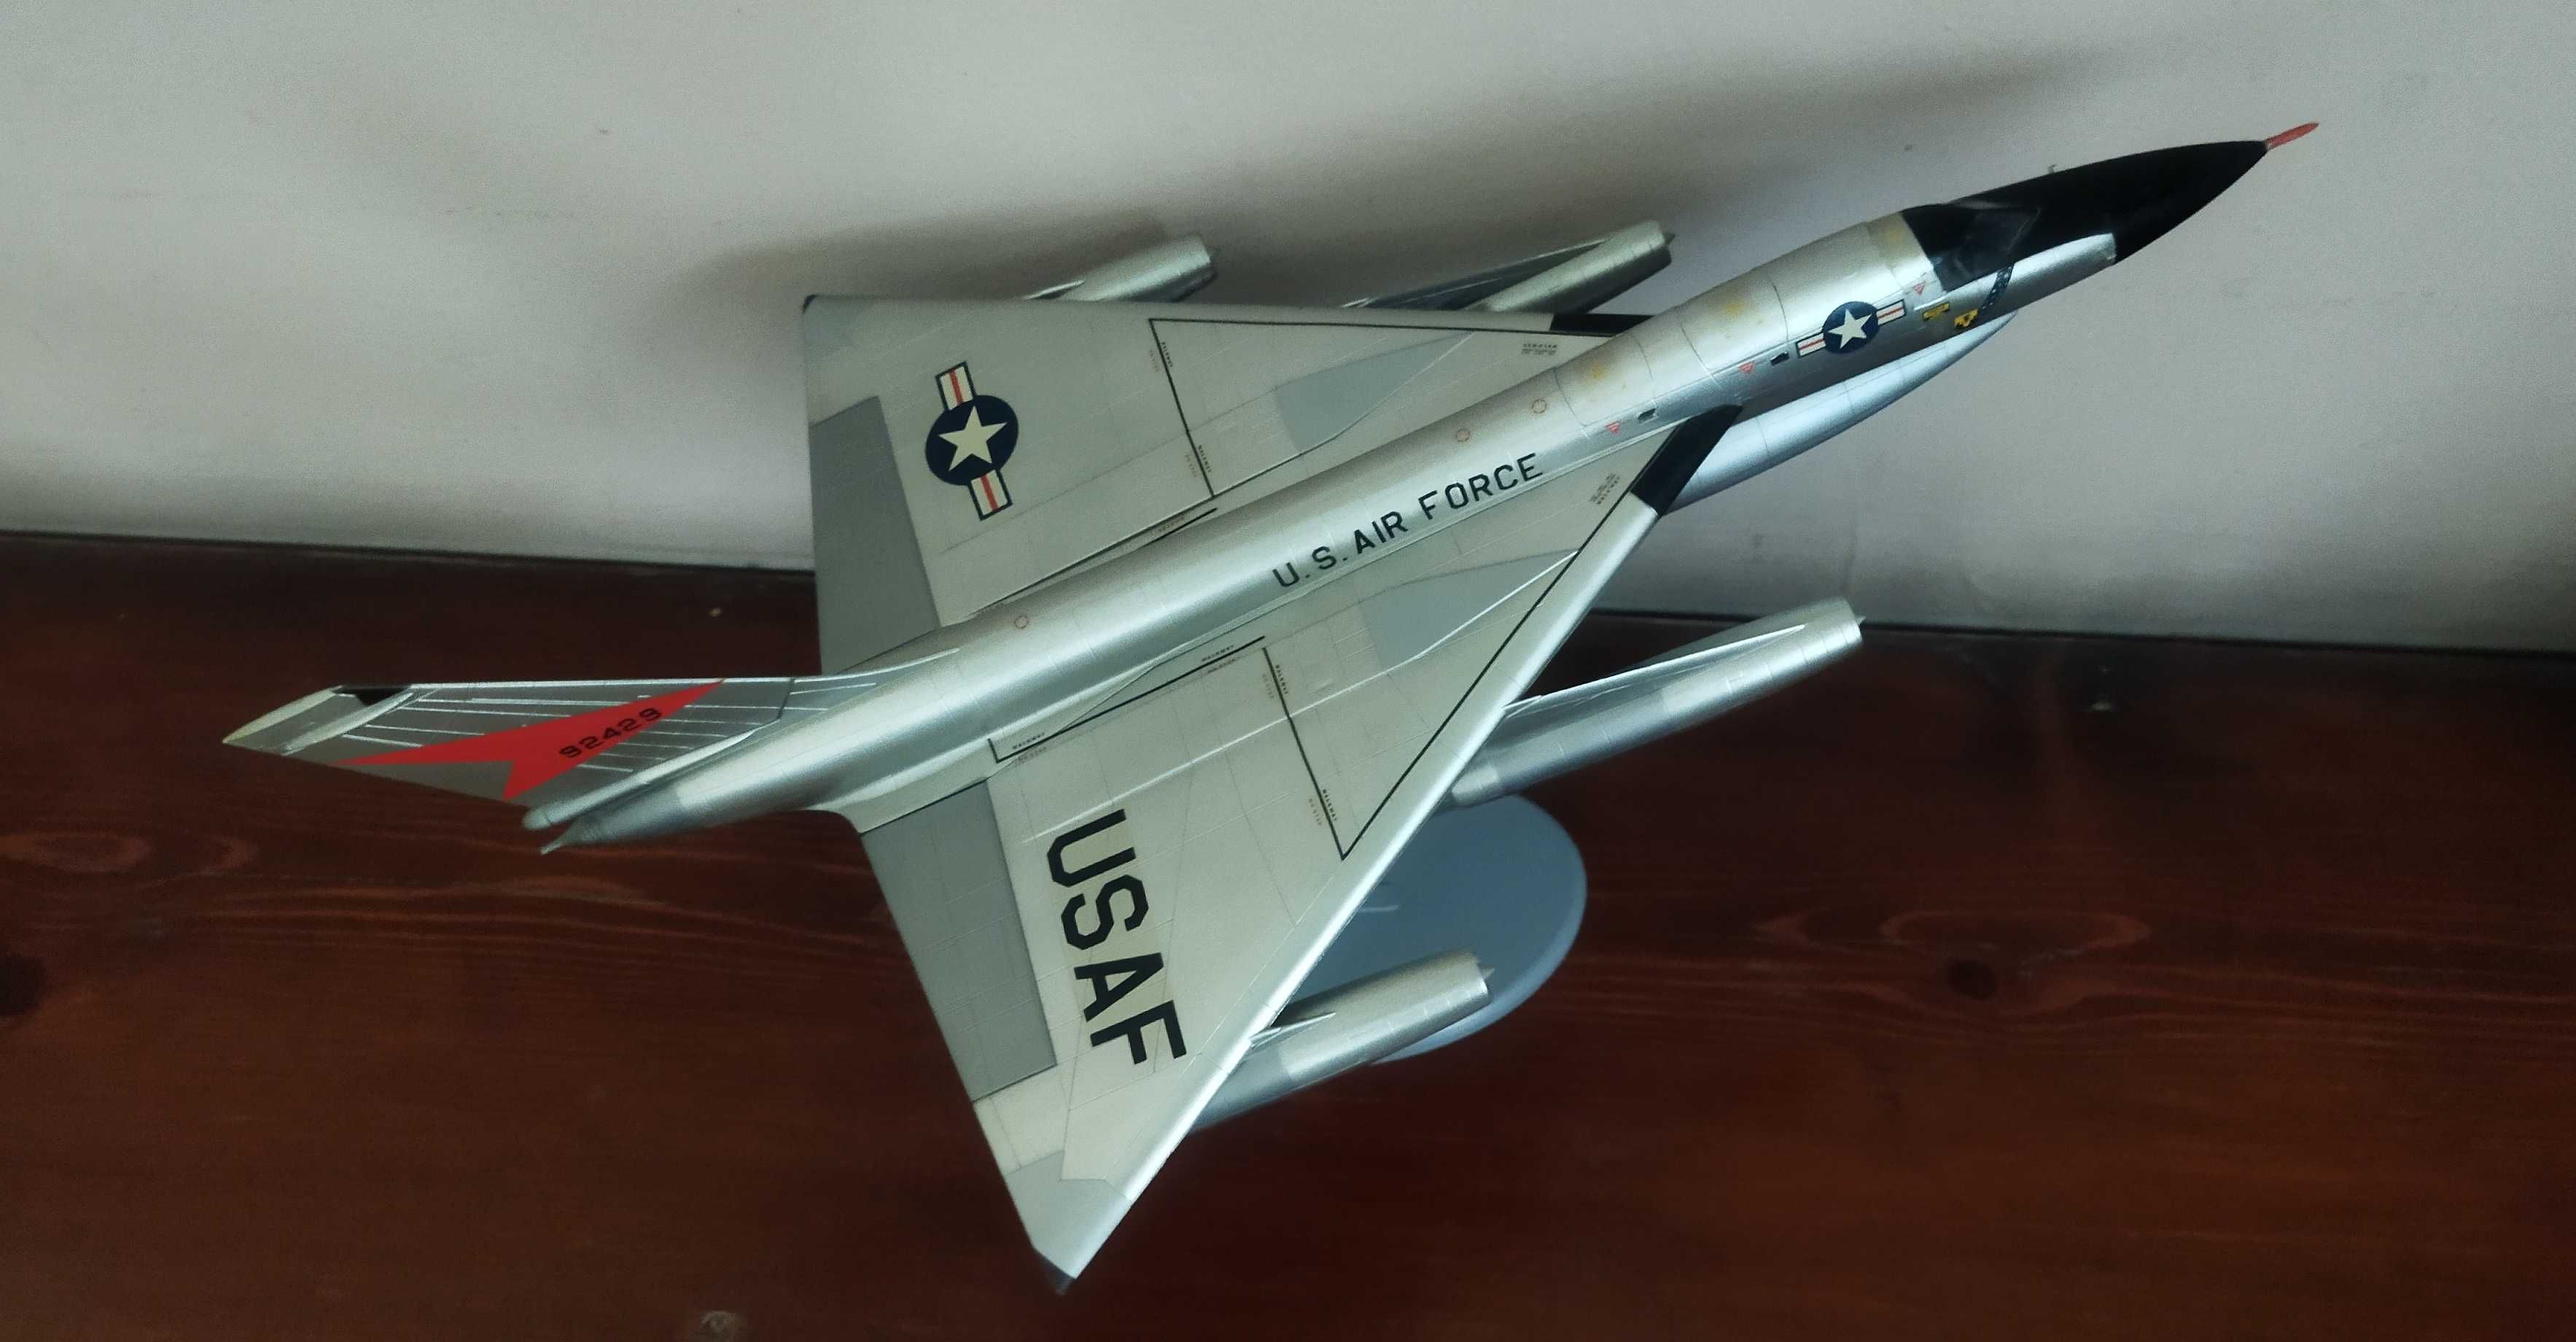 подарочная модель самолёта B-58 Hustler пр. Италия!